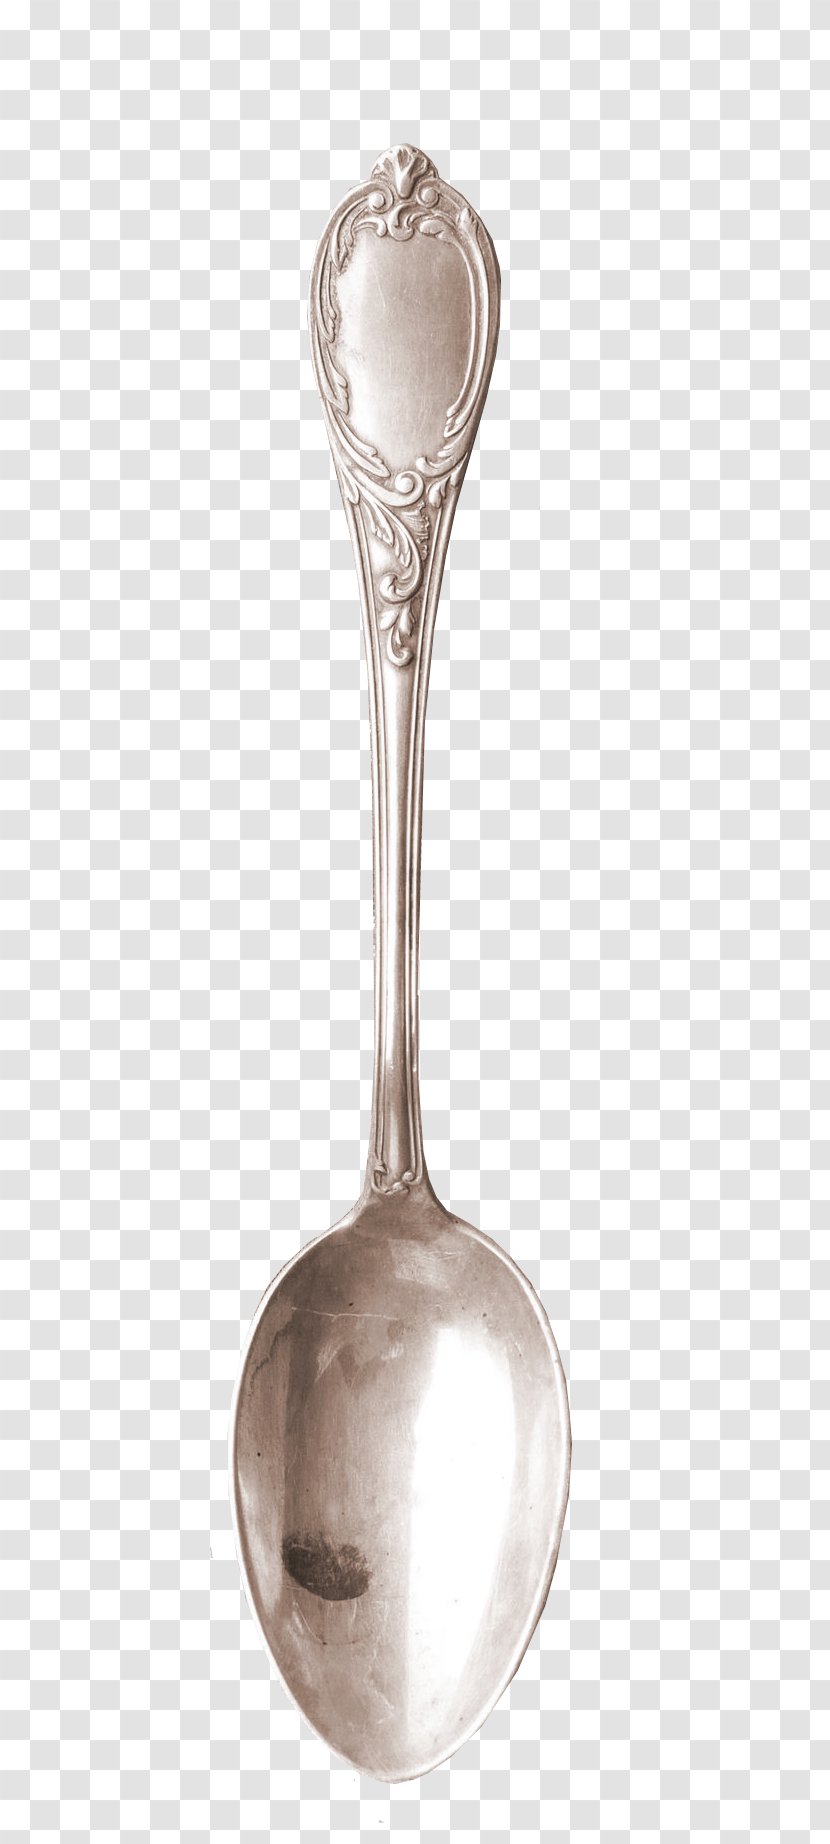 silver ladle spoon